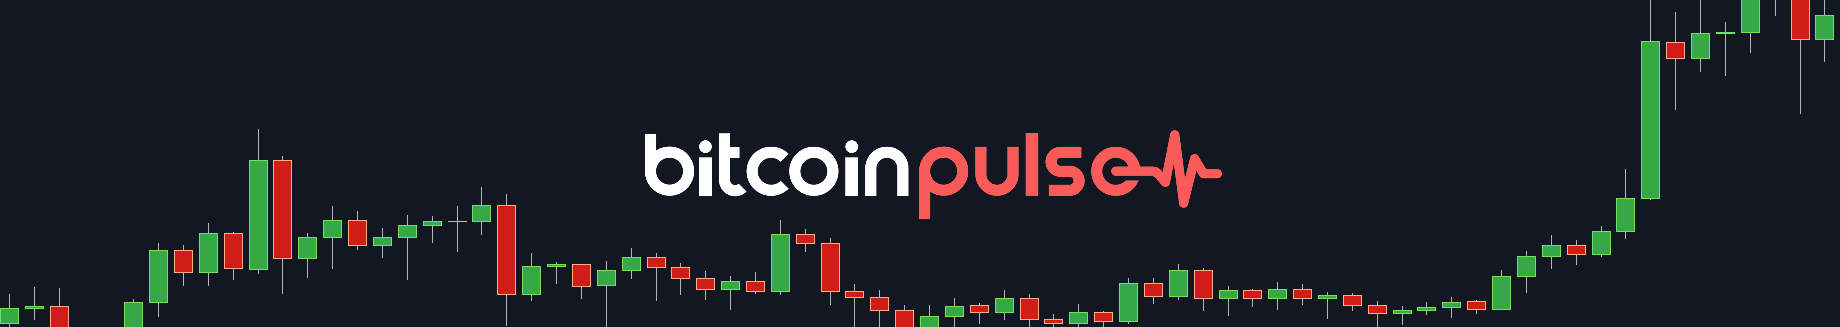 No Pain, No Gain - Bitcoin Pulse #98